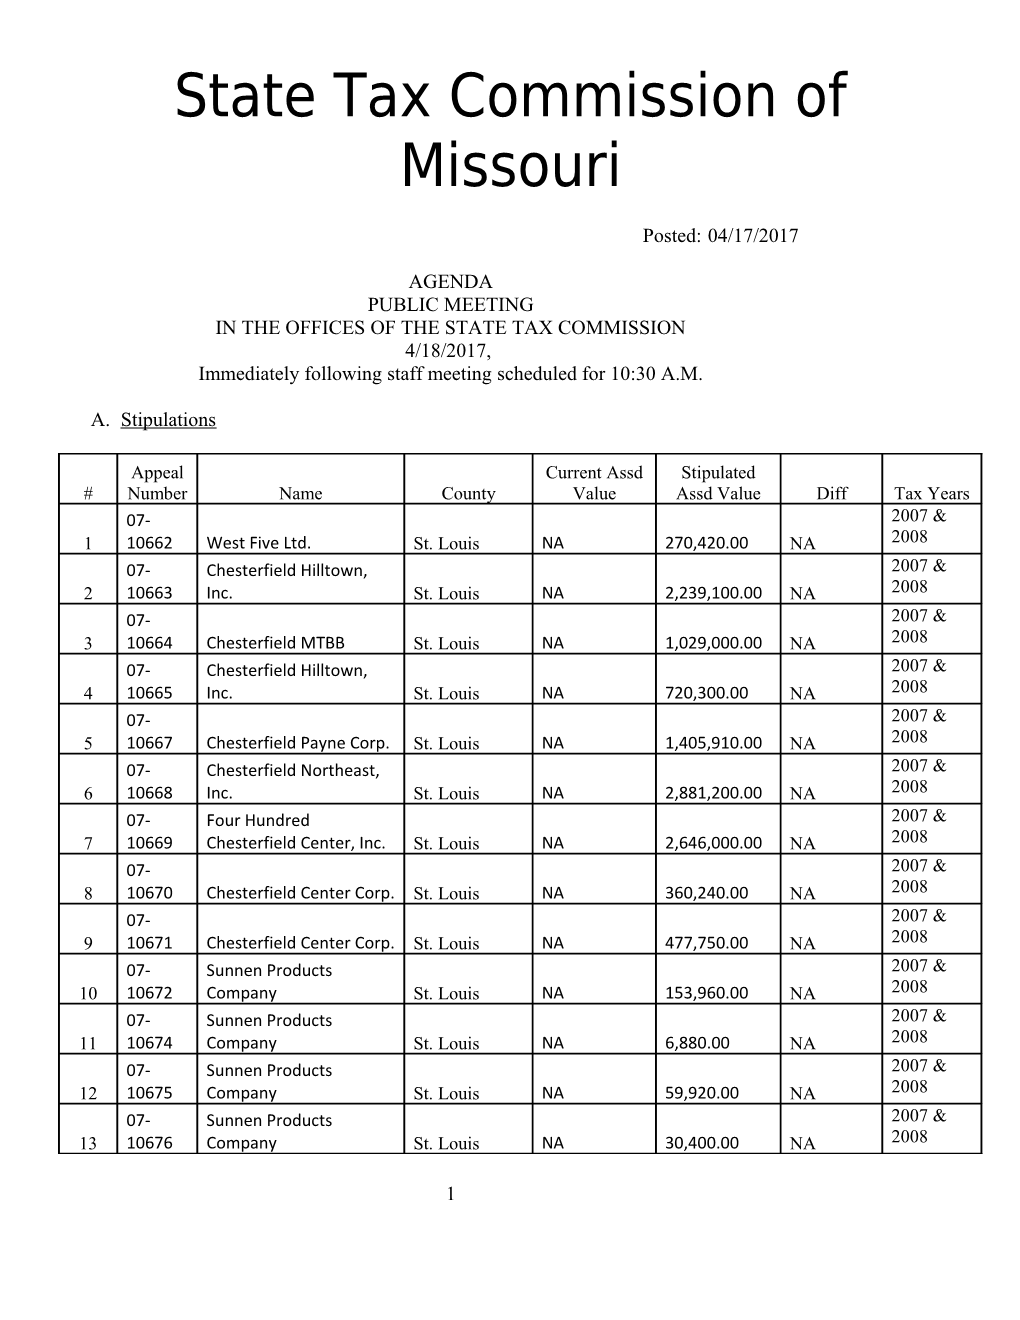 State Tax Commission of Missouri